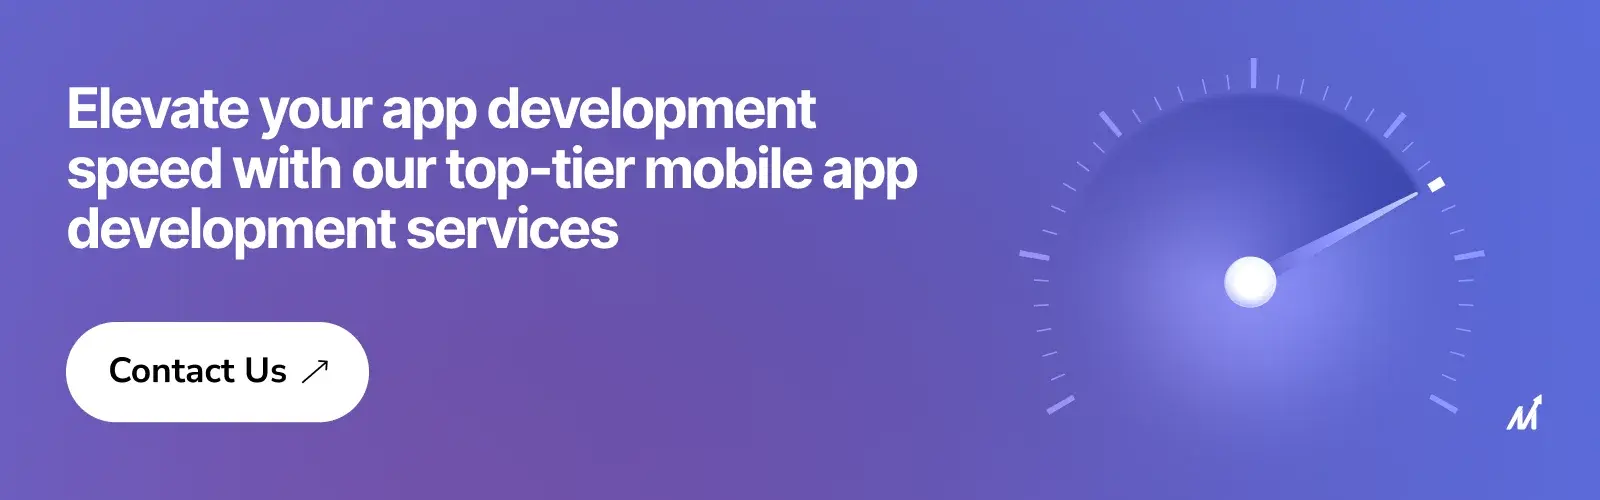 Reduce app development timeline with our mobile app development.